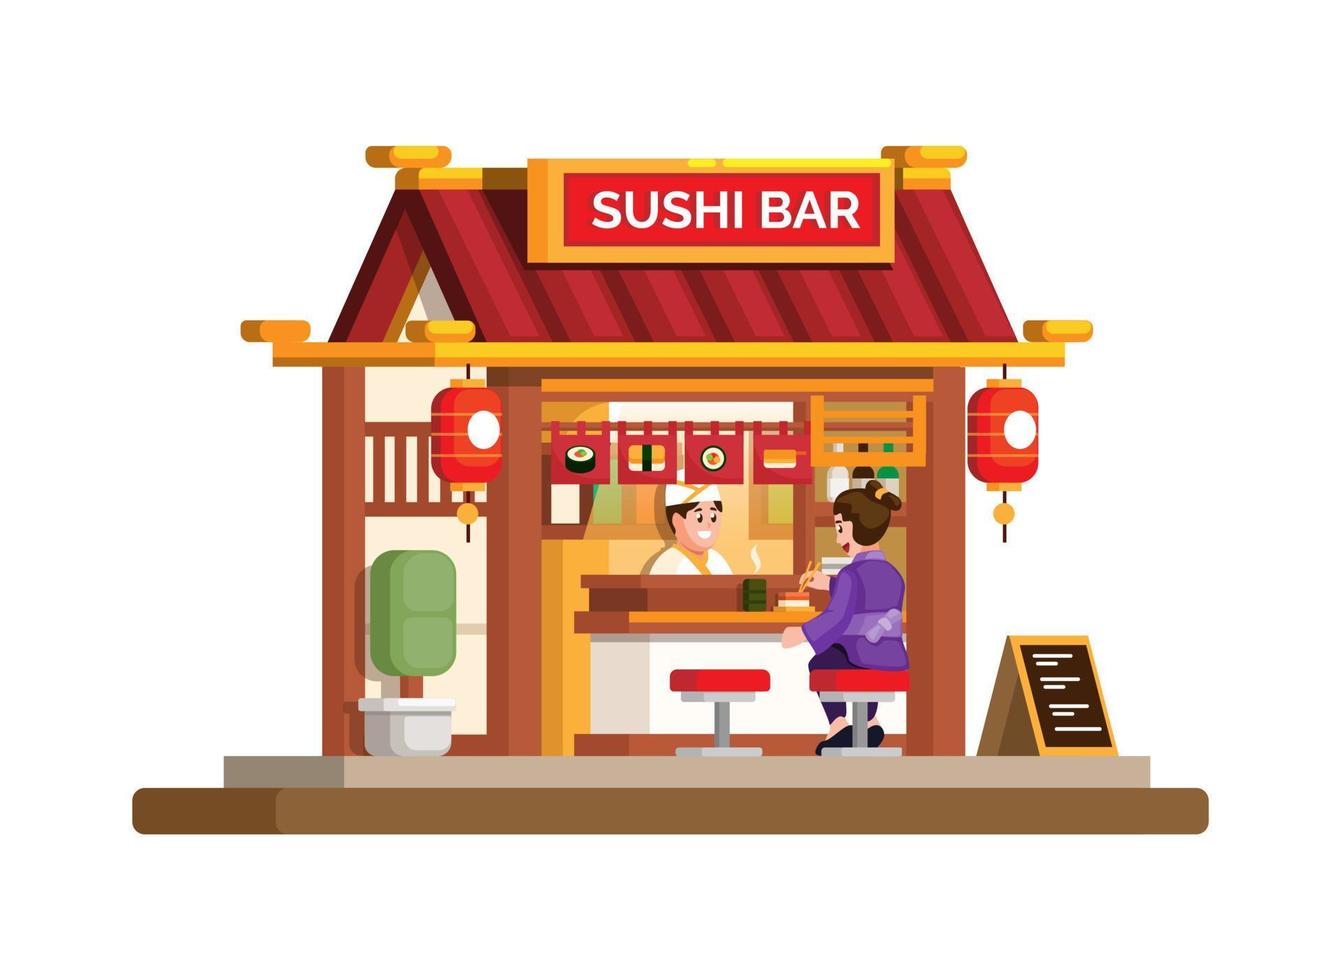 Sushi bar japonés tradicional restaurante asiático comida símbolo edificio plano dibujos animados ilustración vector